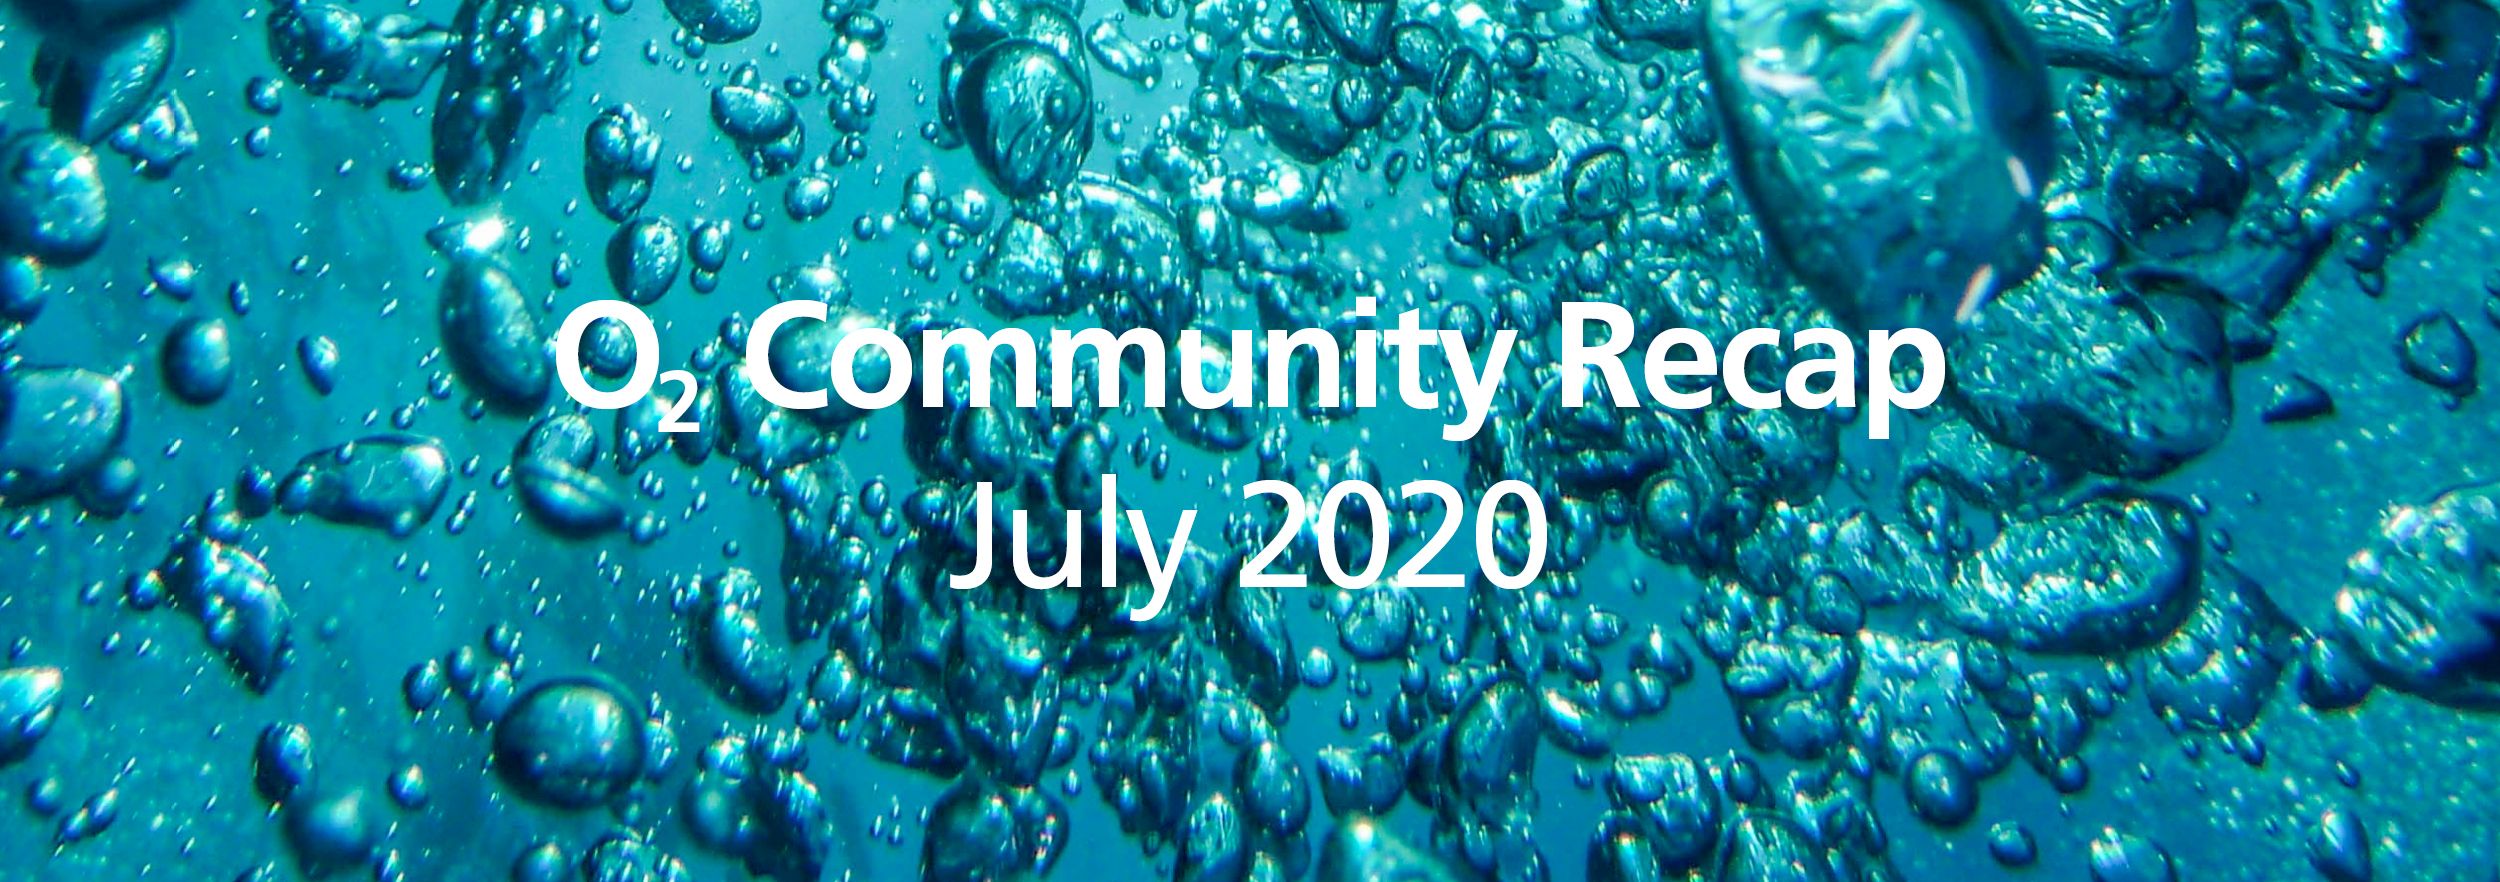 community-recap-july2020.jpg